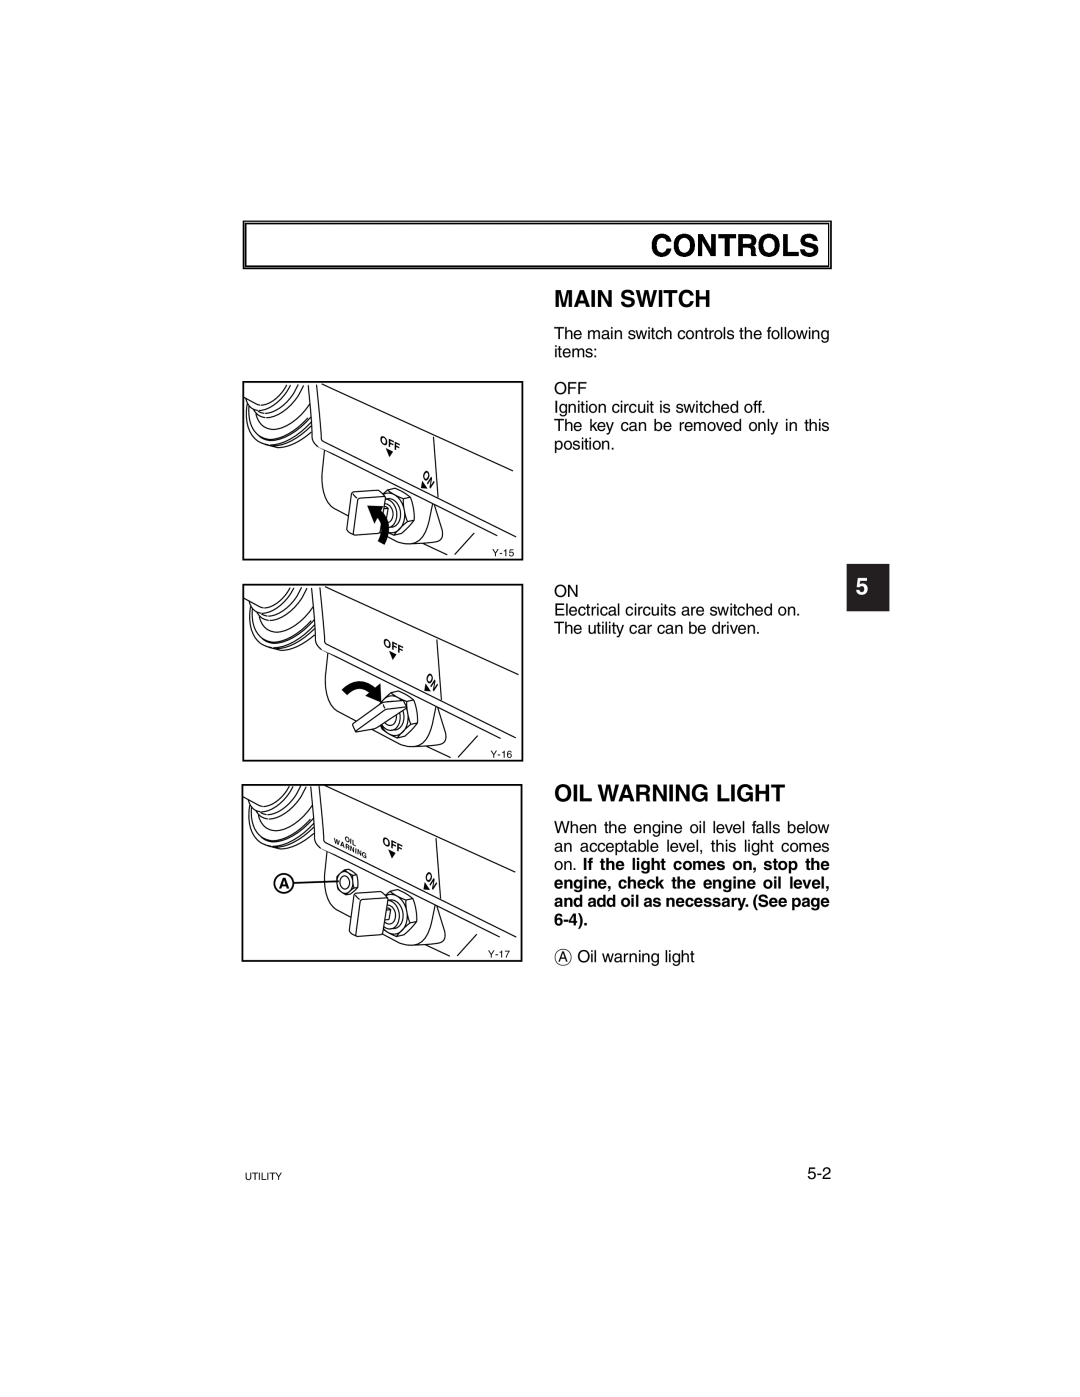 Yamaha G21A manual 2 3, Controls, Main Switch, Oil Warning Light 